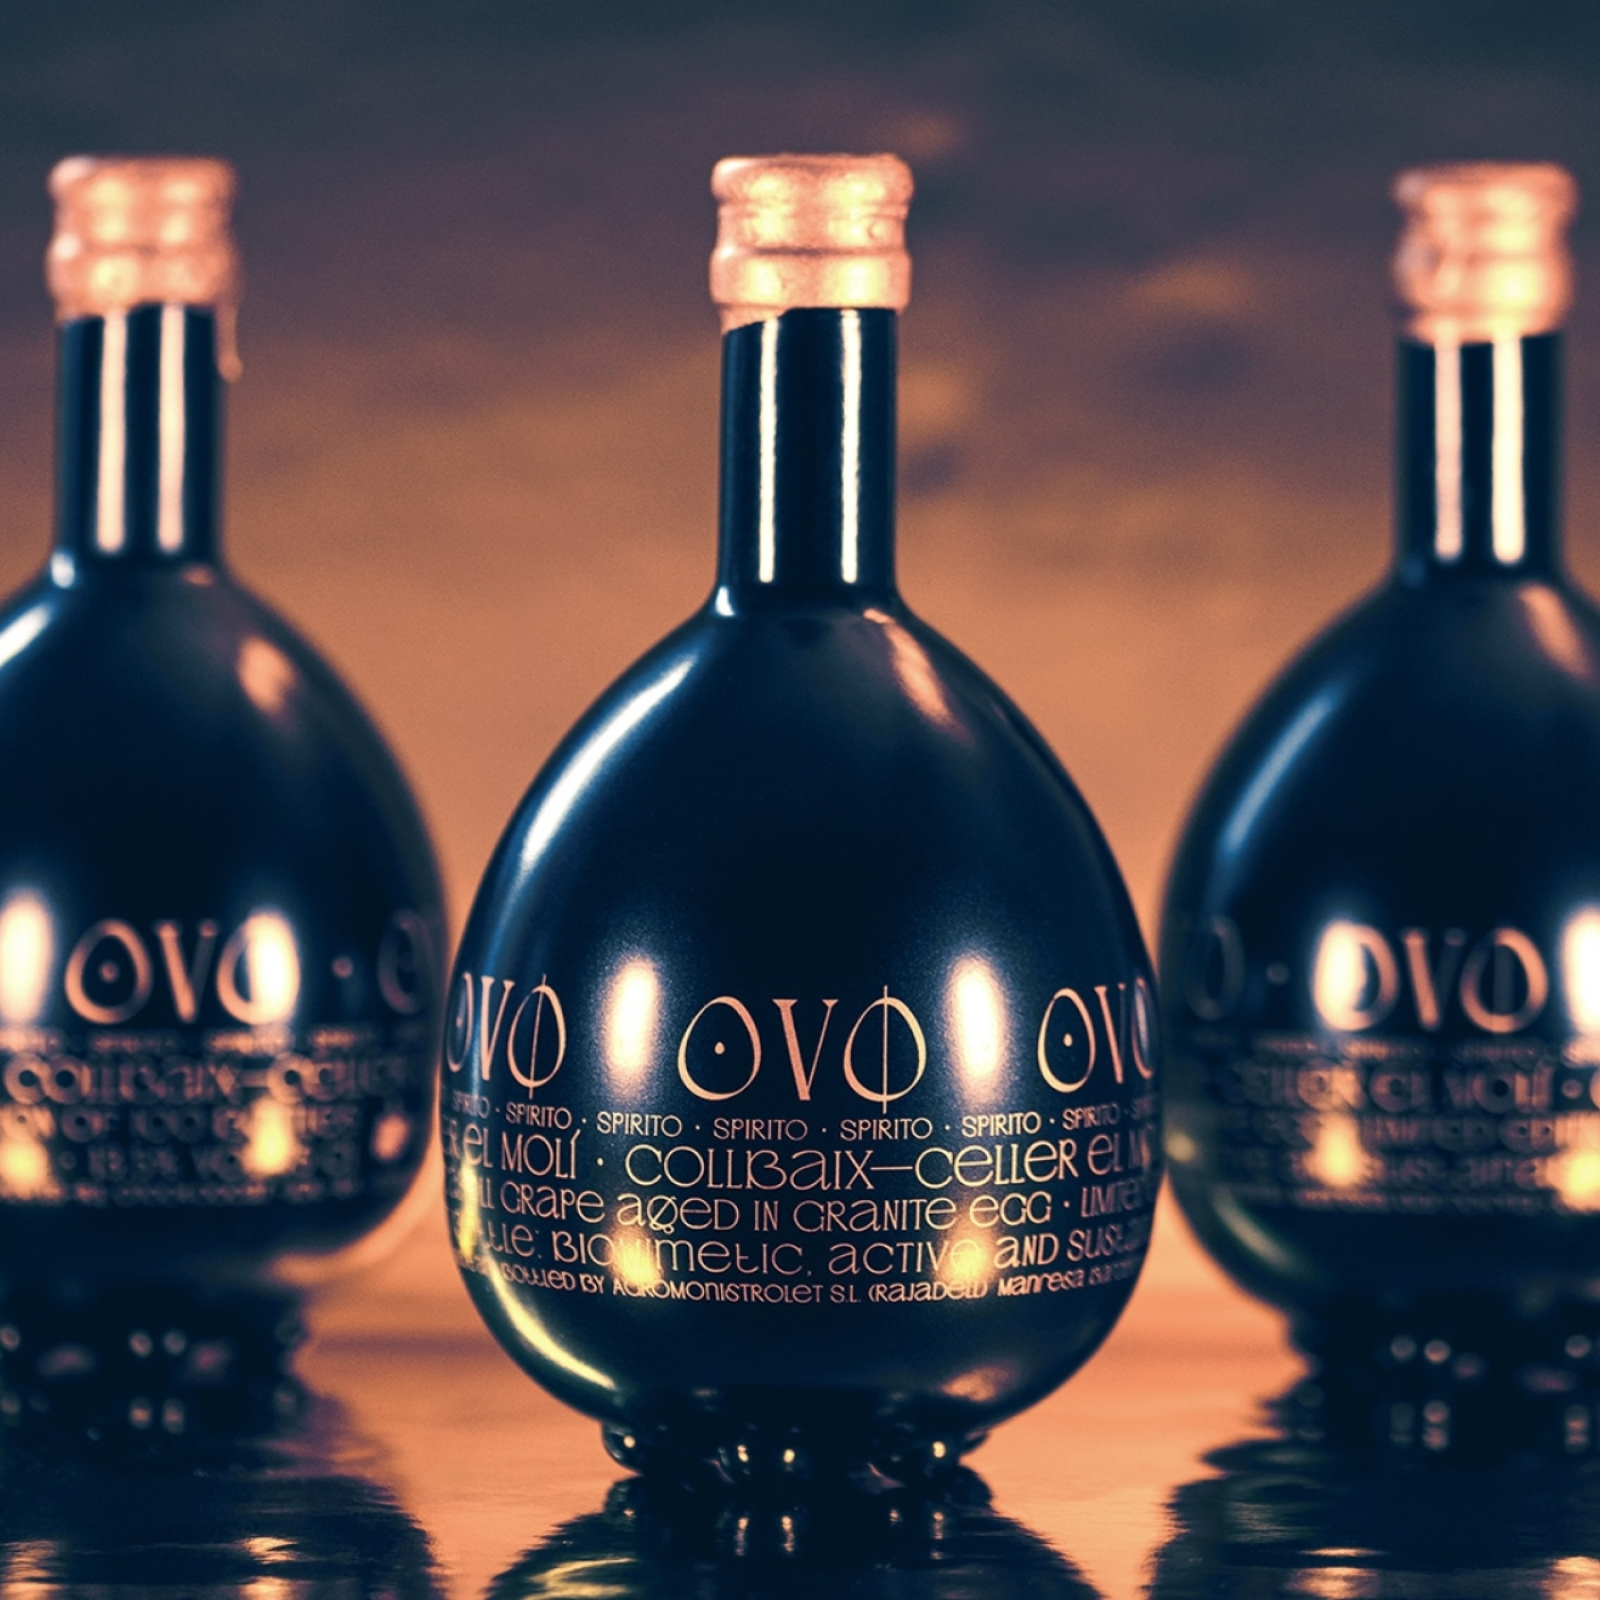 OV, biodynamic wines - One-of-a-kind design